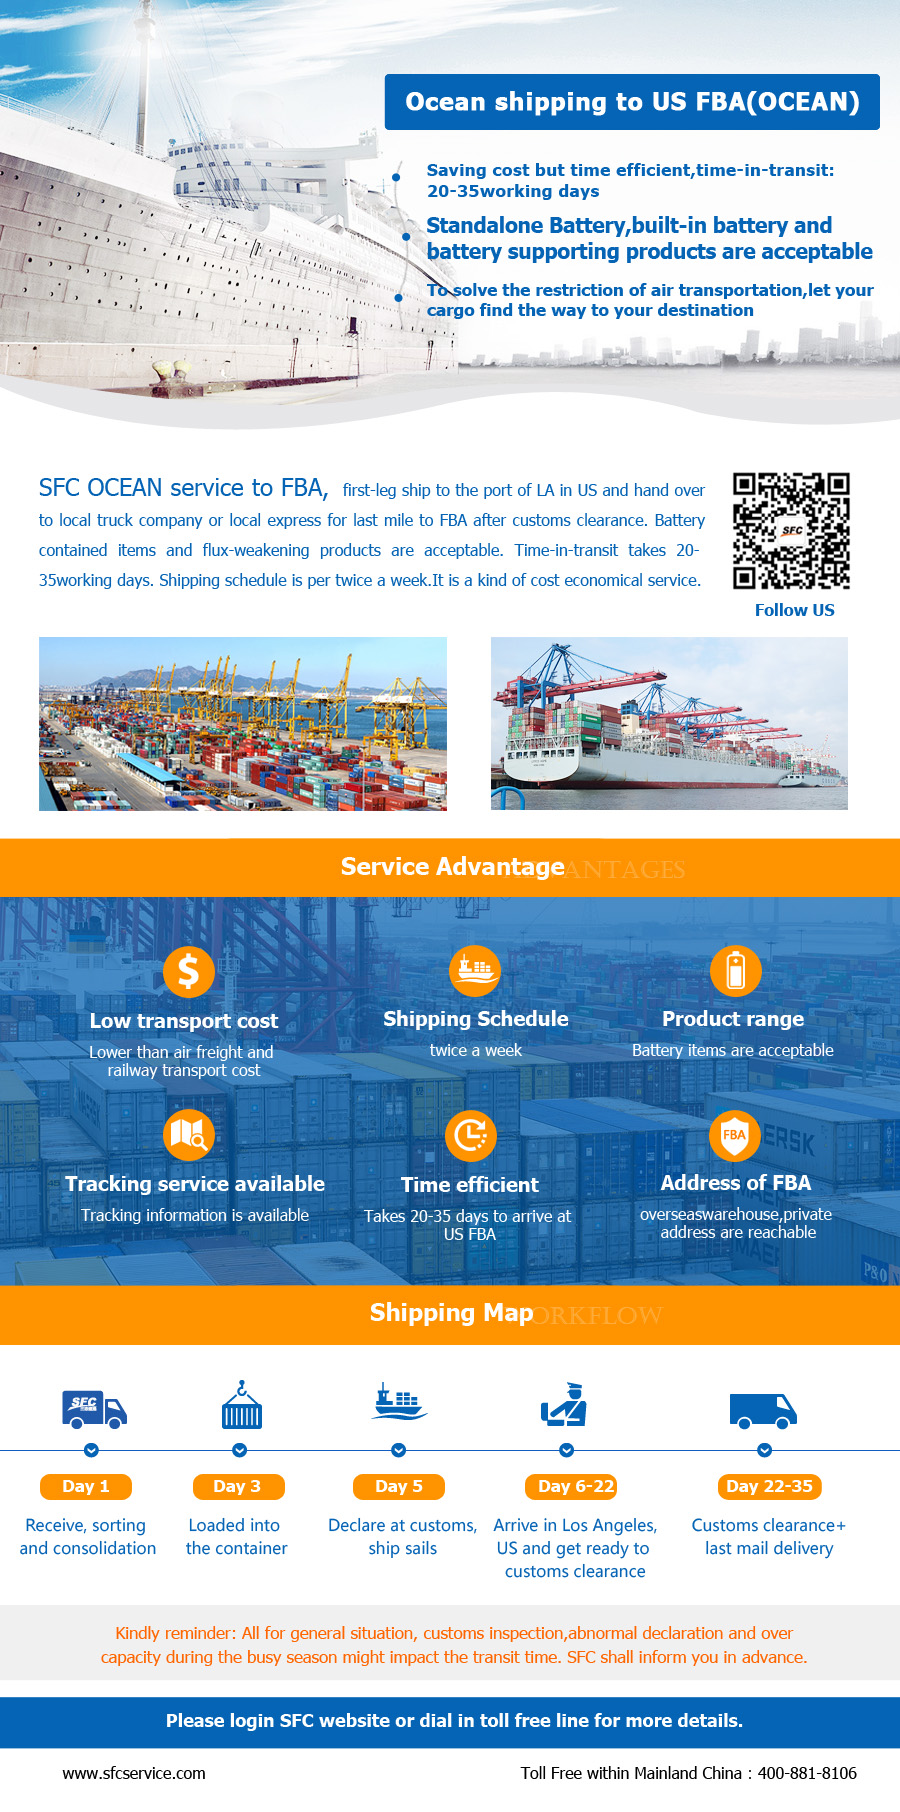 Ocean shipping to FBA,US(OCEAN)